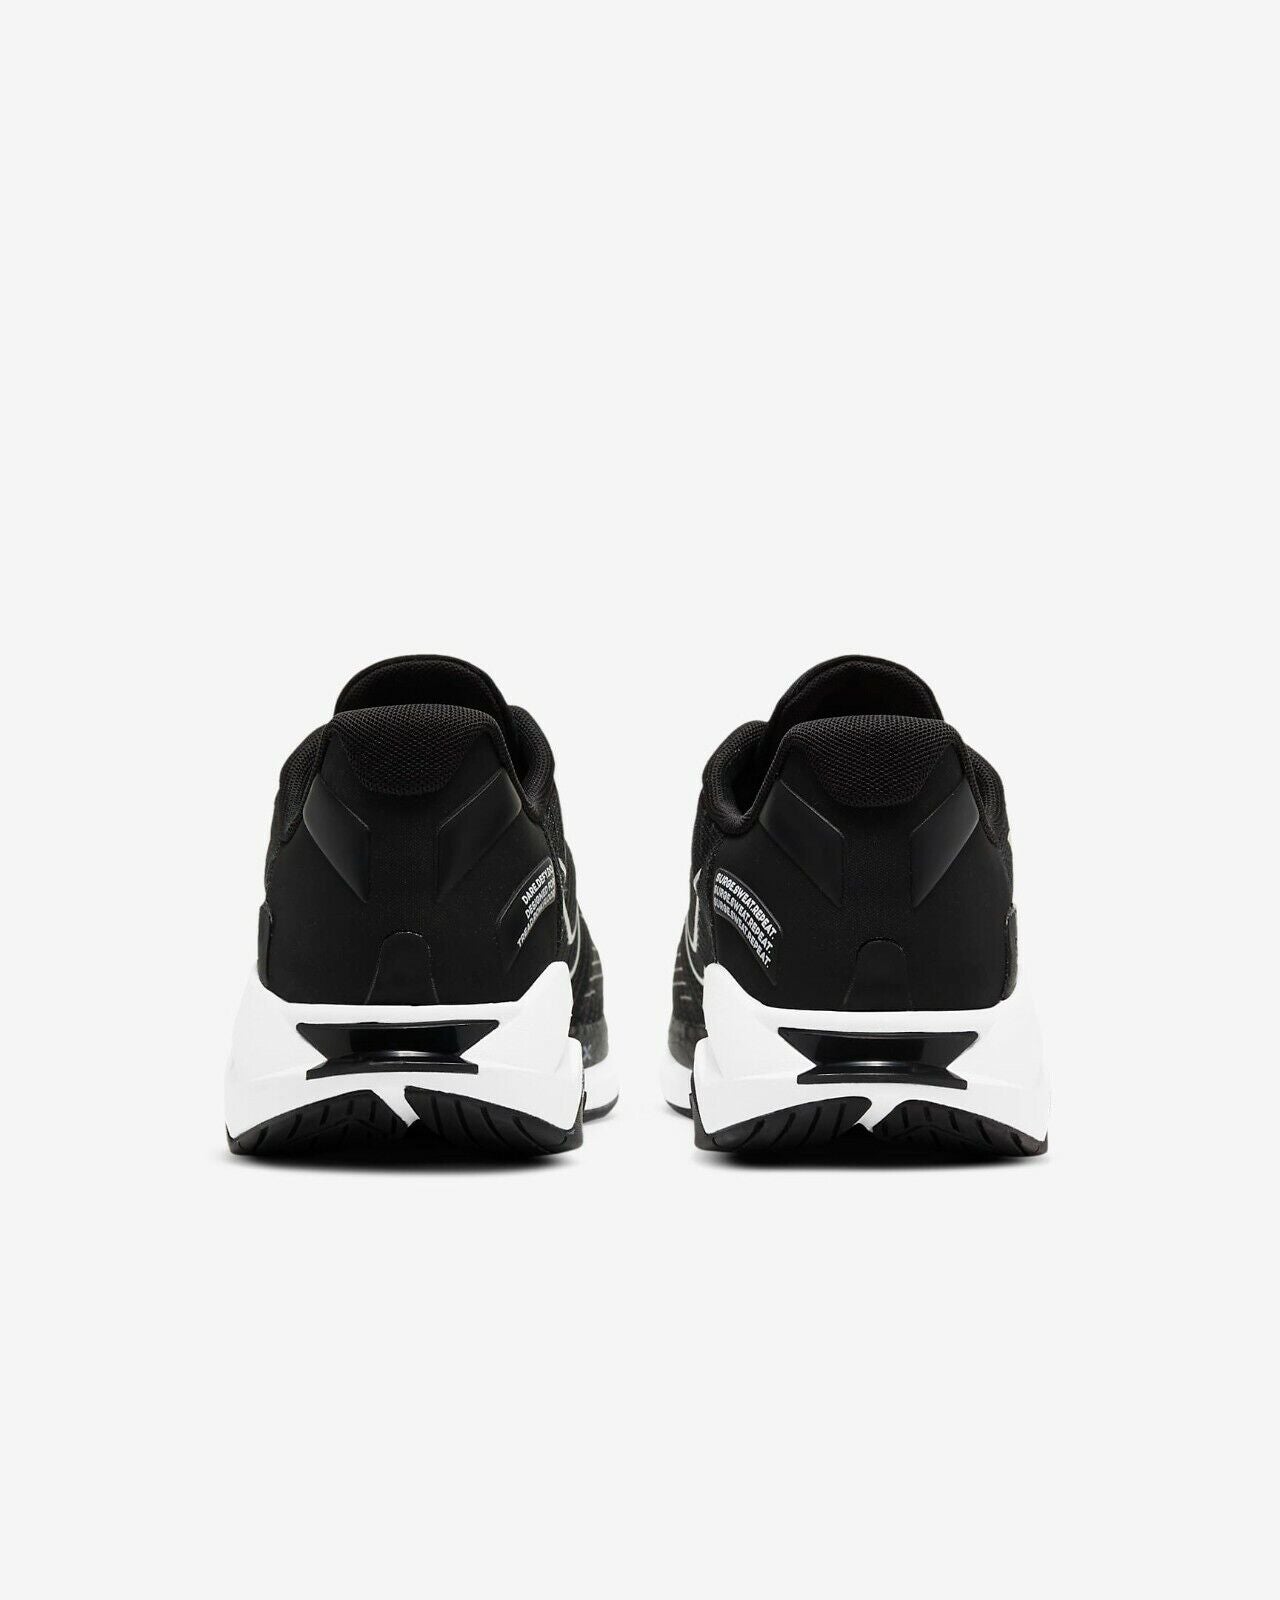 Men's Nike ZoomX SuperRep Surge Training Shoes, CU7627 002 Multi Sizes Black/Black/White